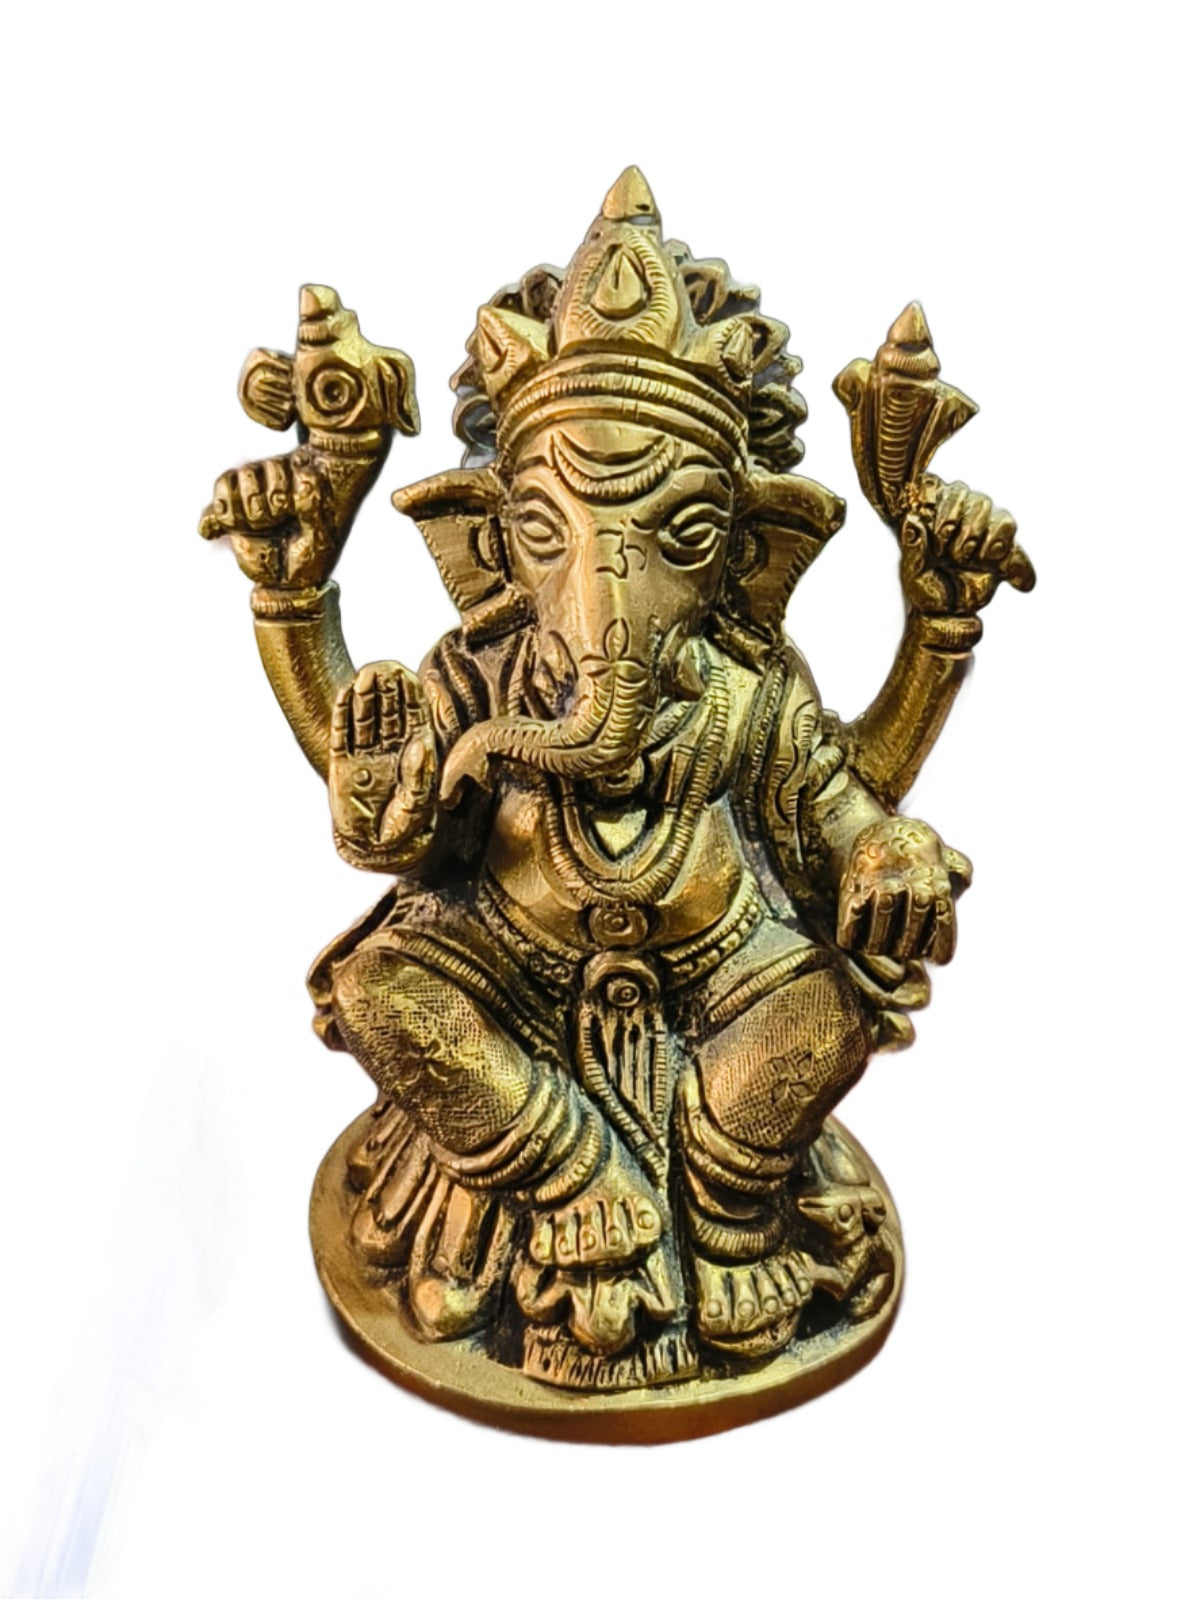 Brass Ganesha 11cm valampuri